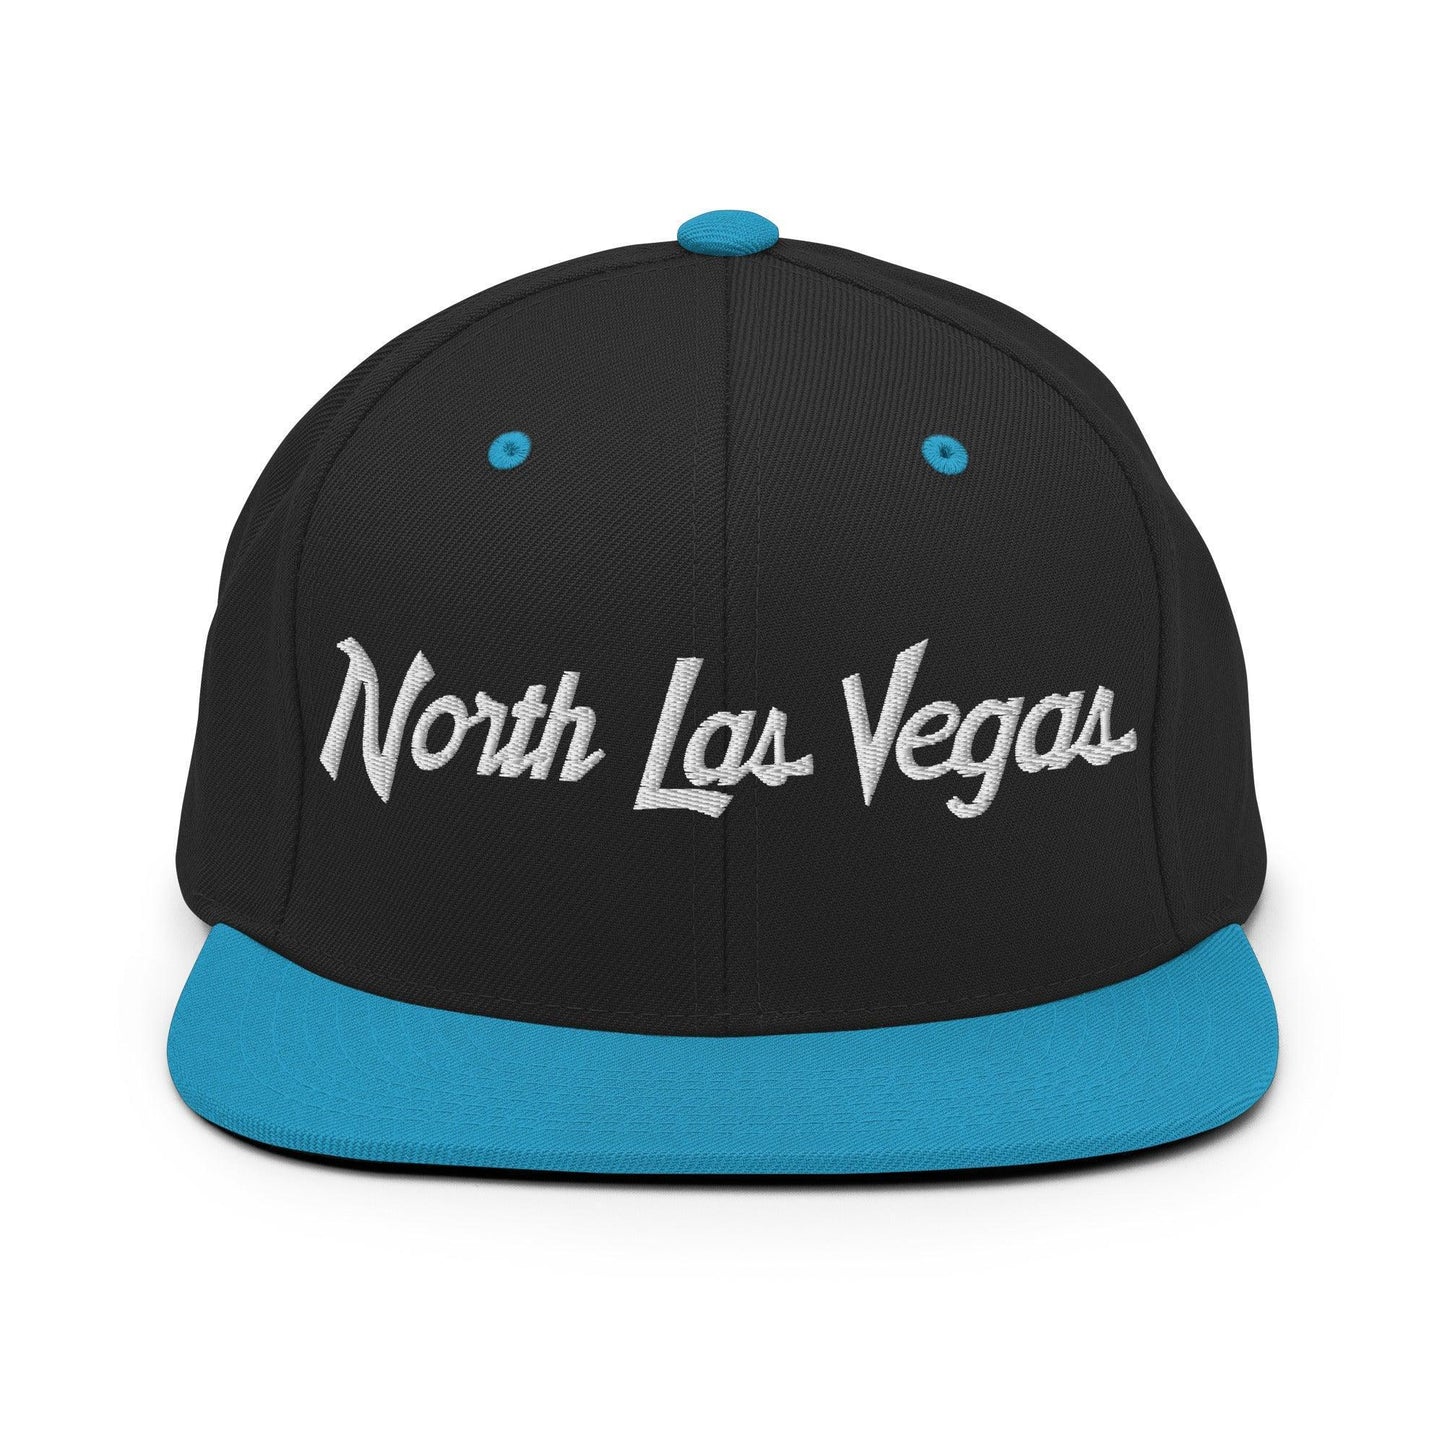 North Las Vegas Script Snapback Hat Black/ Teal